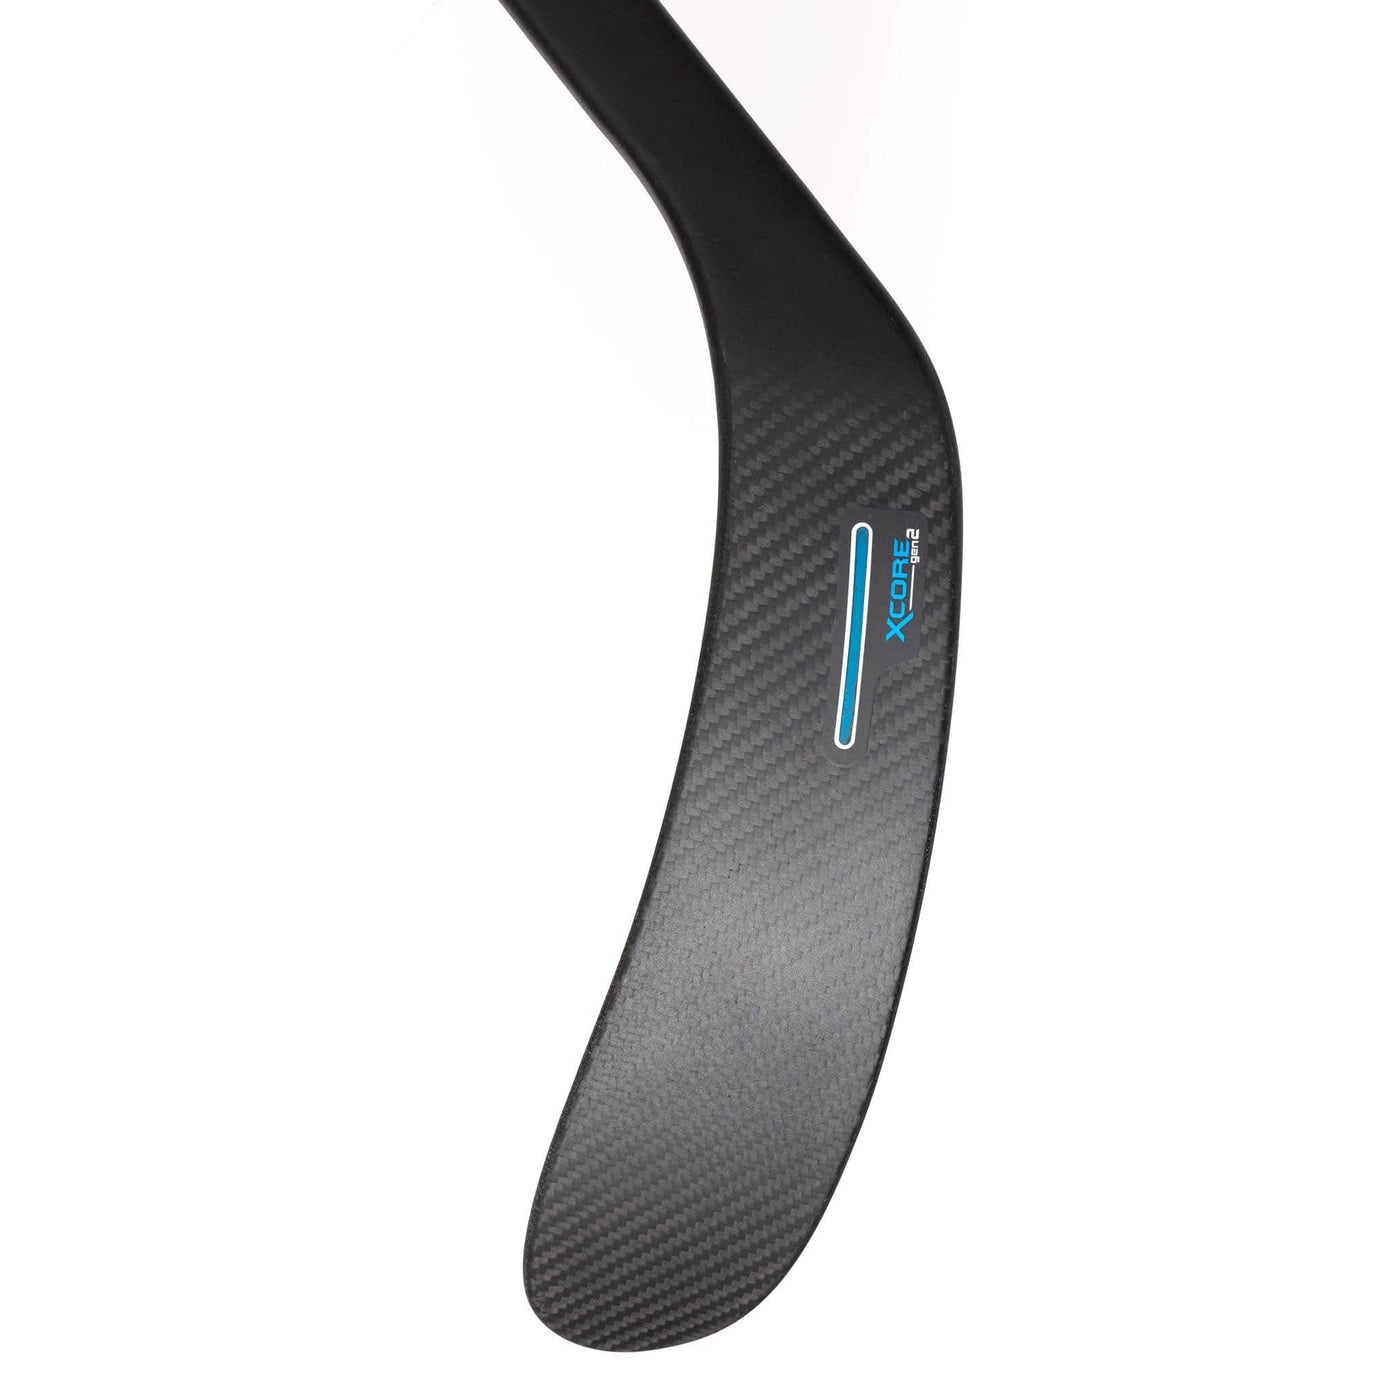 TRUE XC7 ACF Grip Senior Hockey Stick